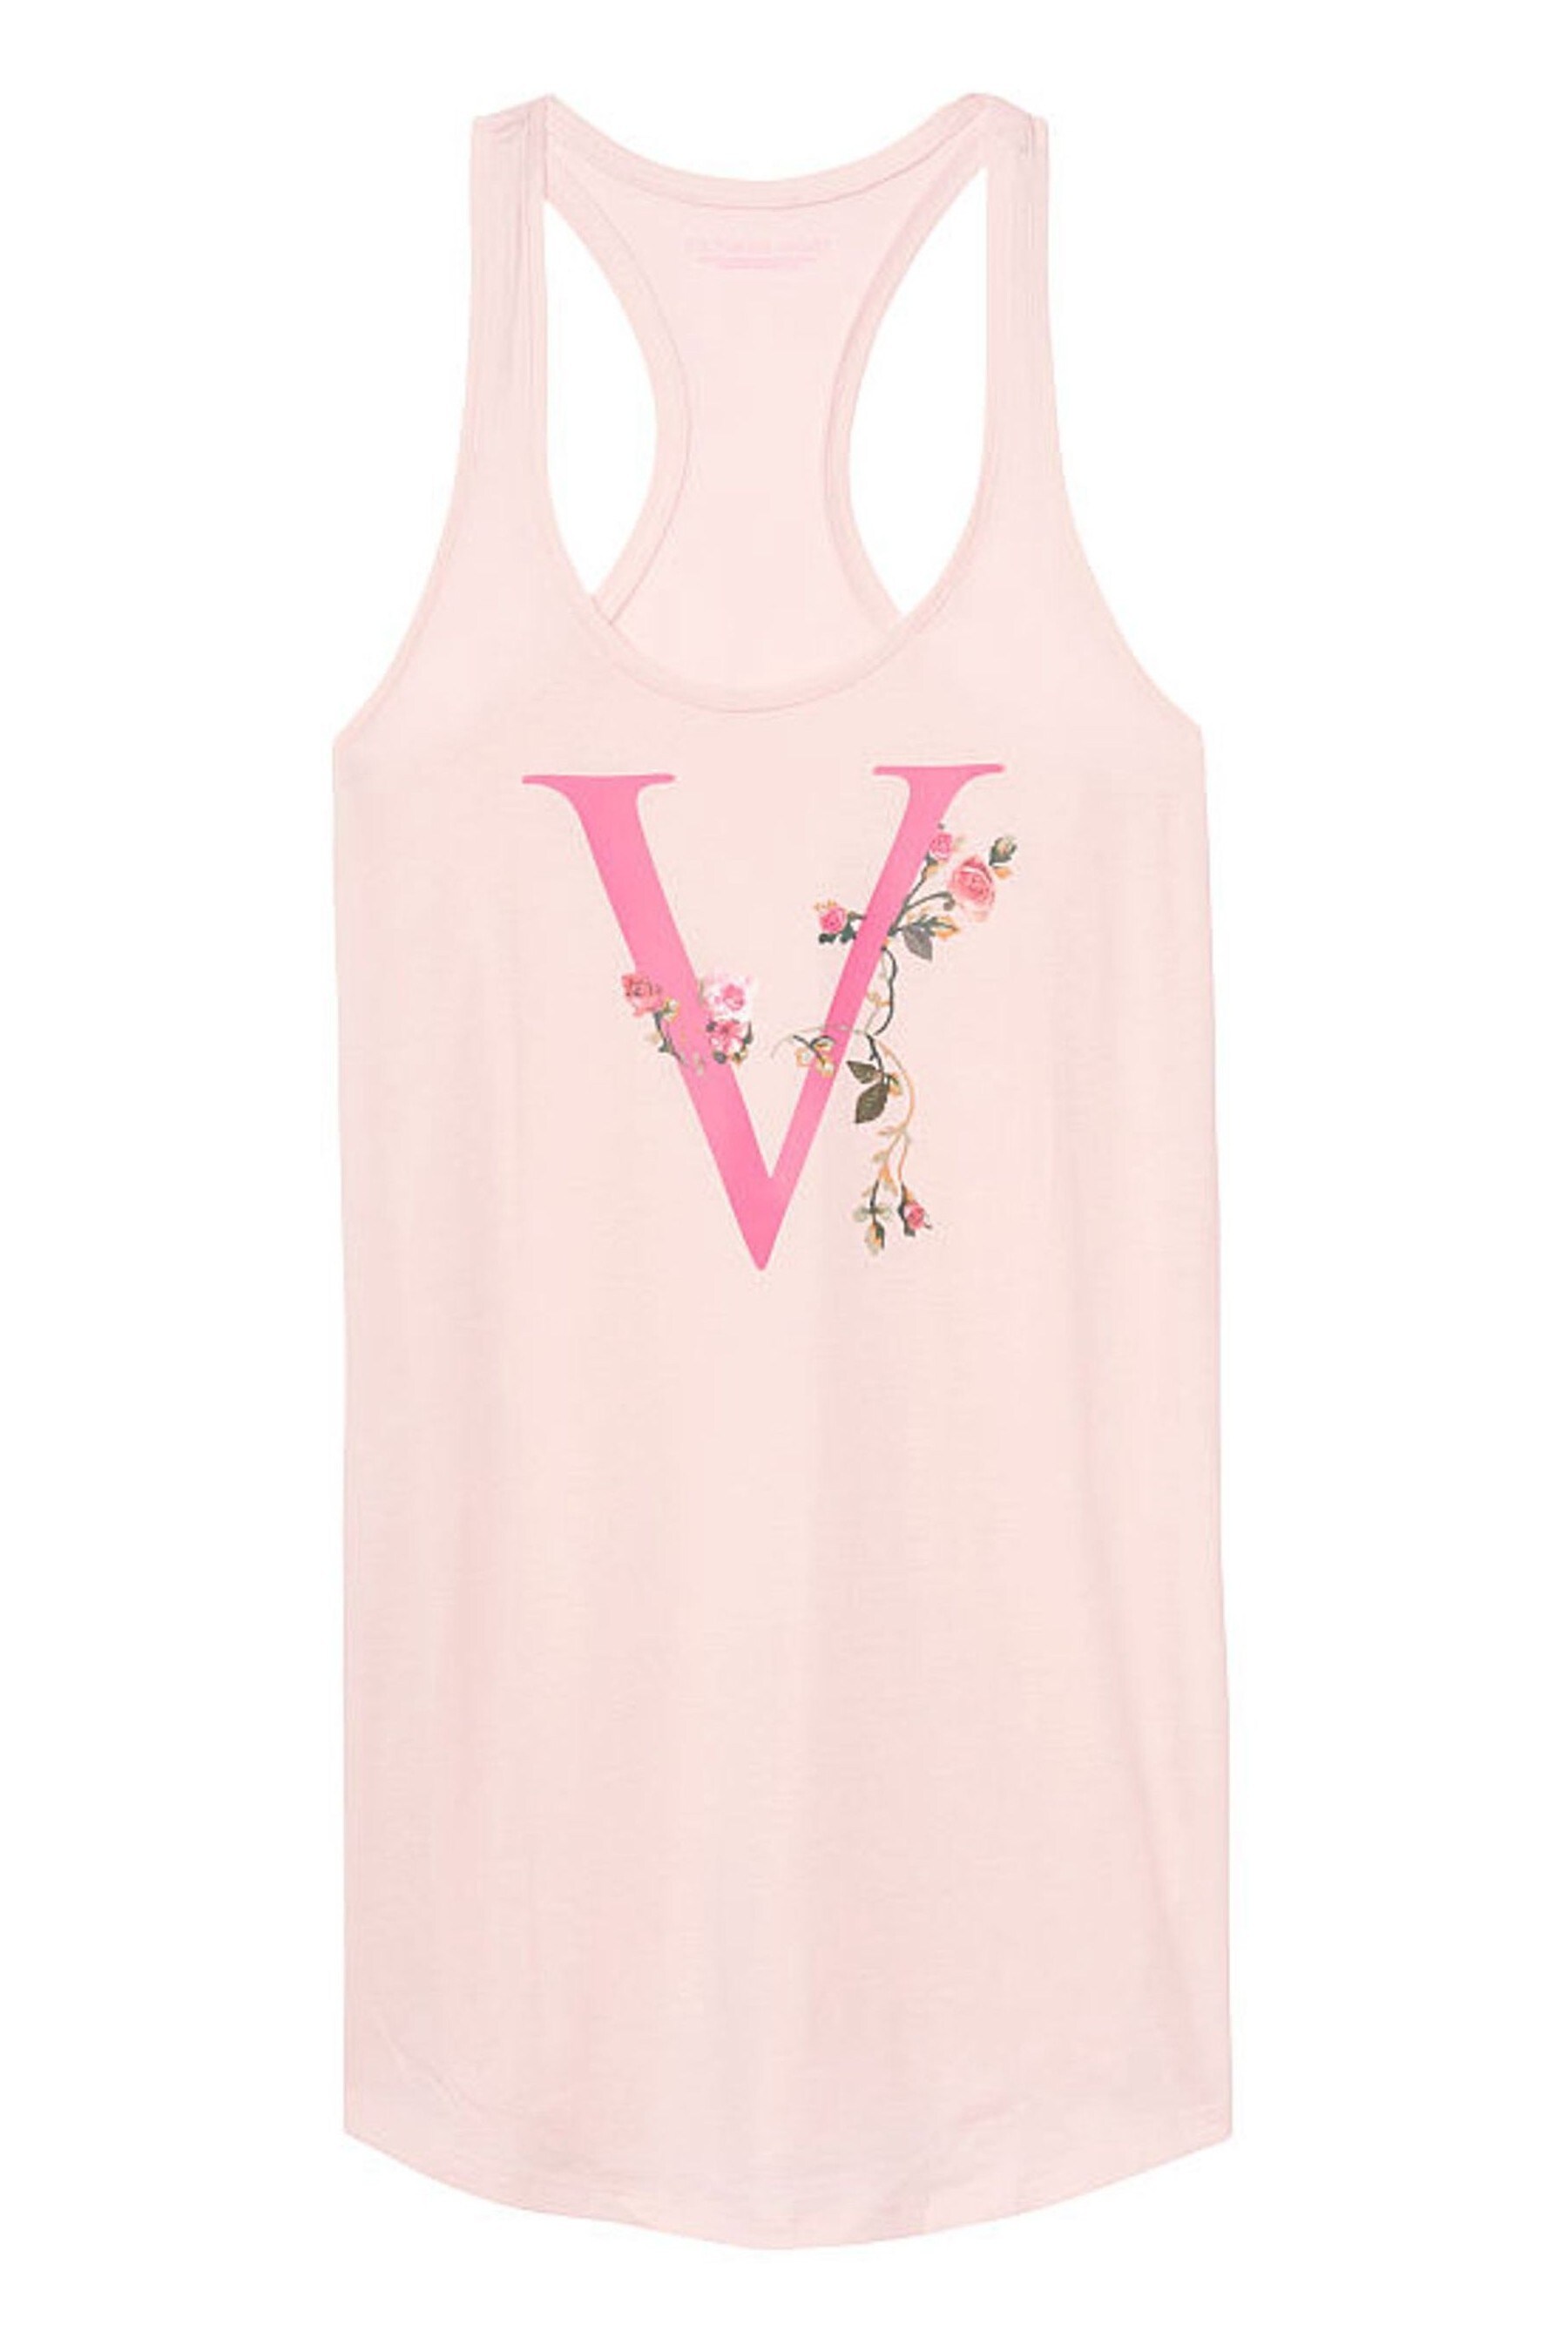 Buy Victoria's Secret Lightweight Cotton Sleepshirt Tank from the